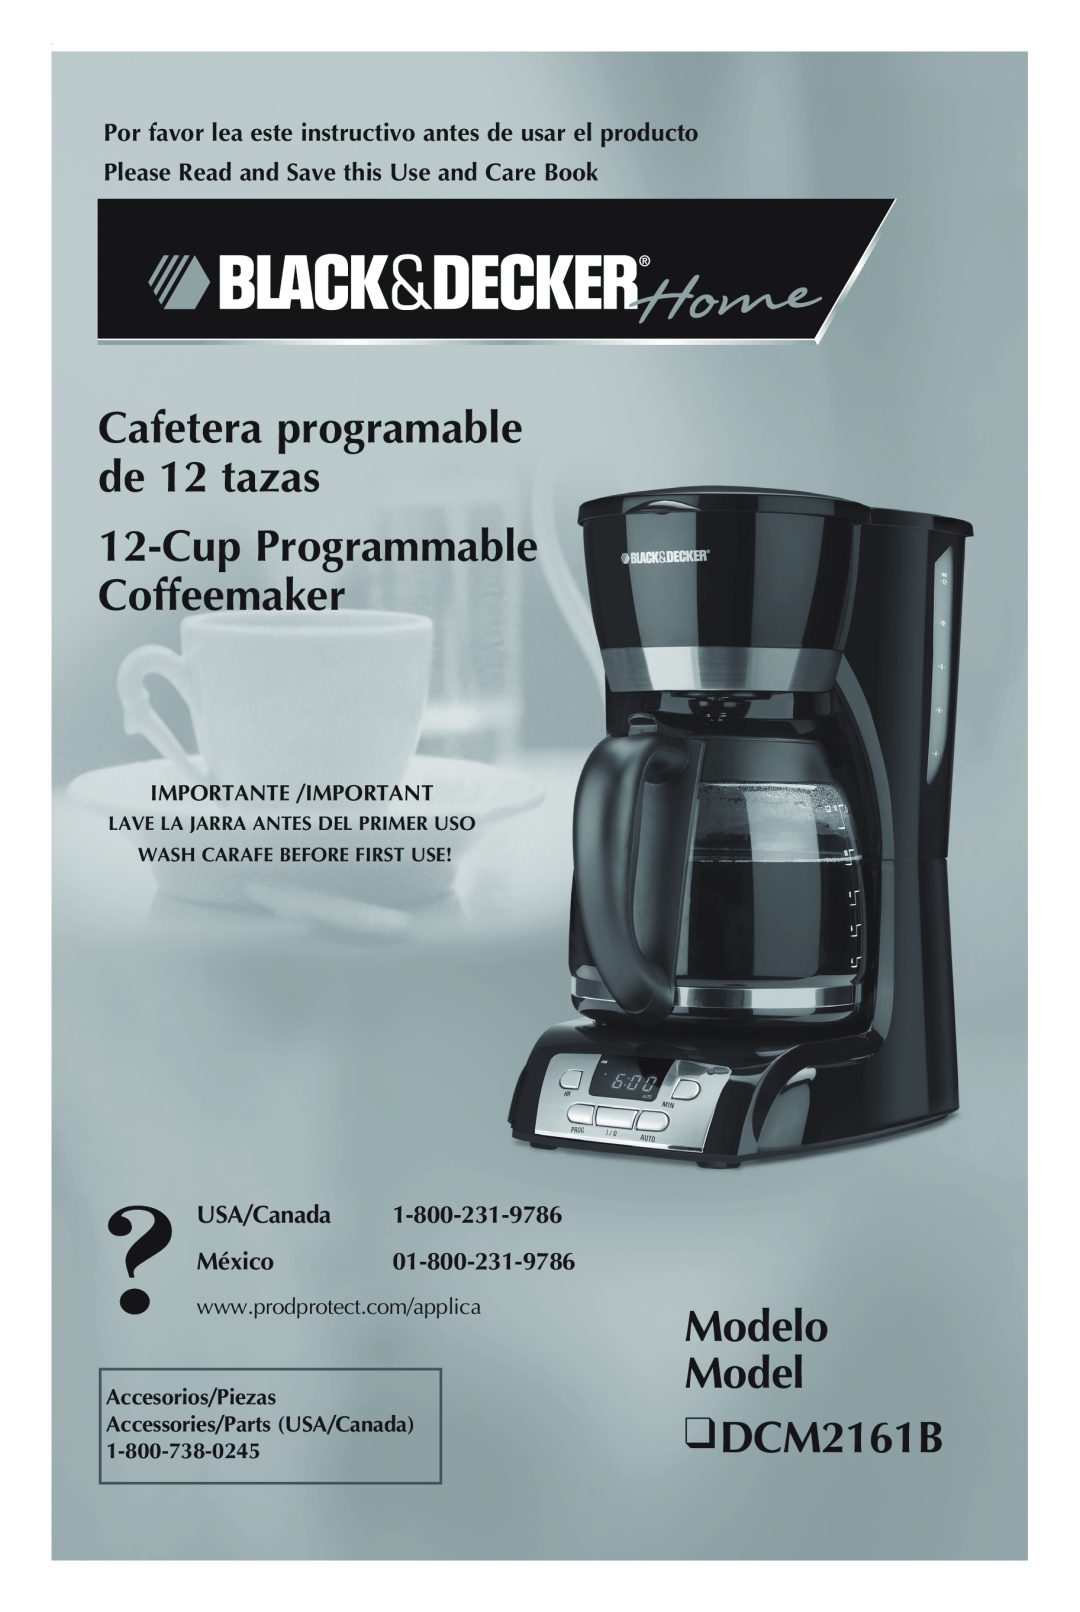 Black & Decker manual Modelo Model DCM2161B, Cafetera programable de 12 tazas 12-Cup Programmable Coffeemaker 